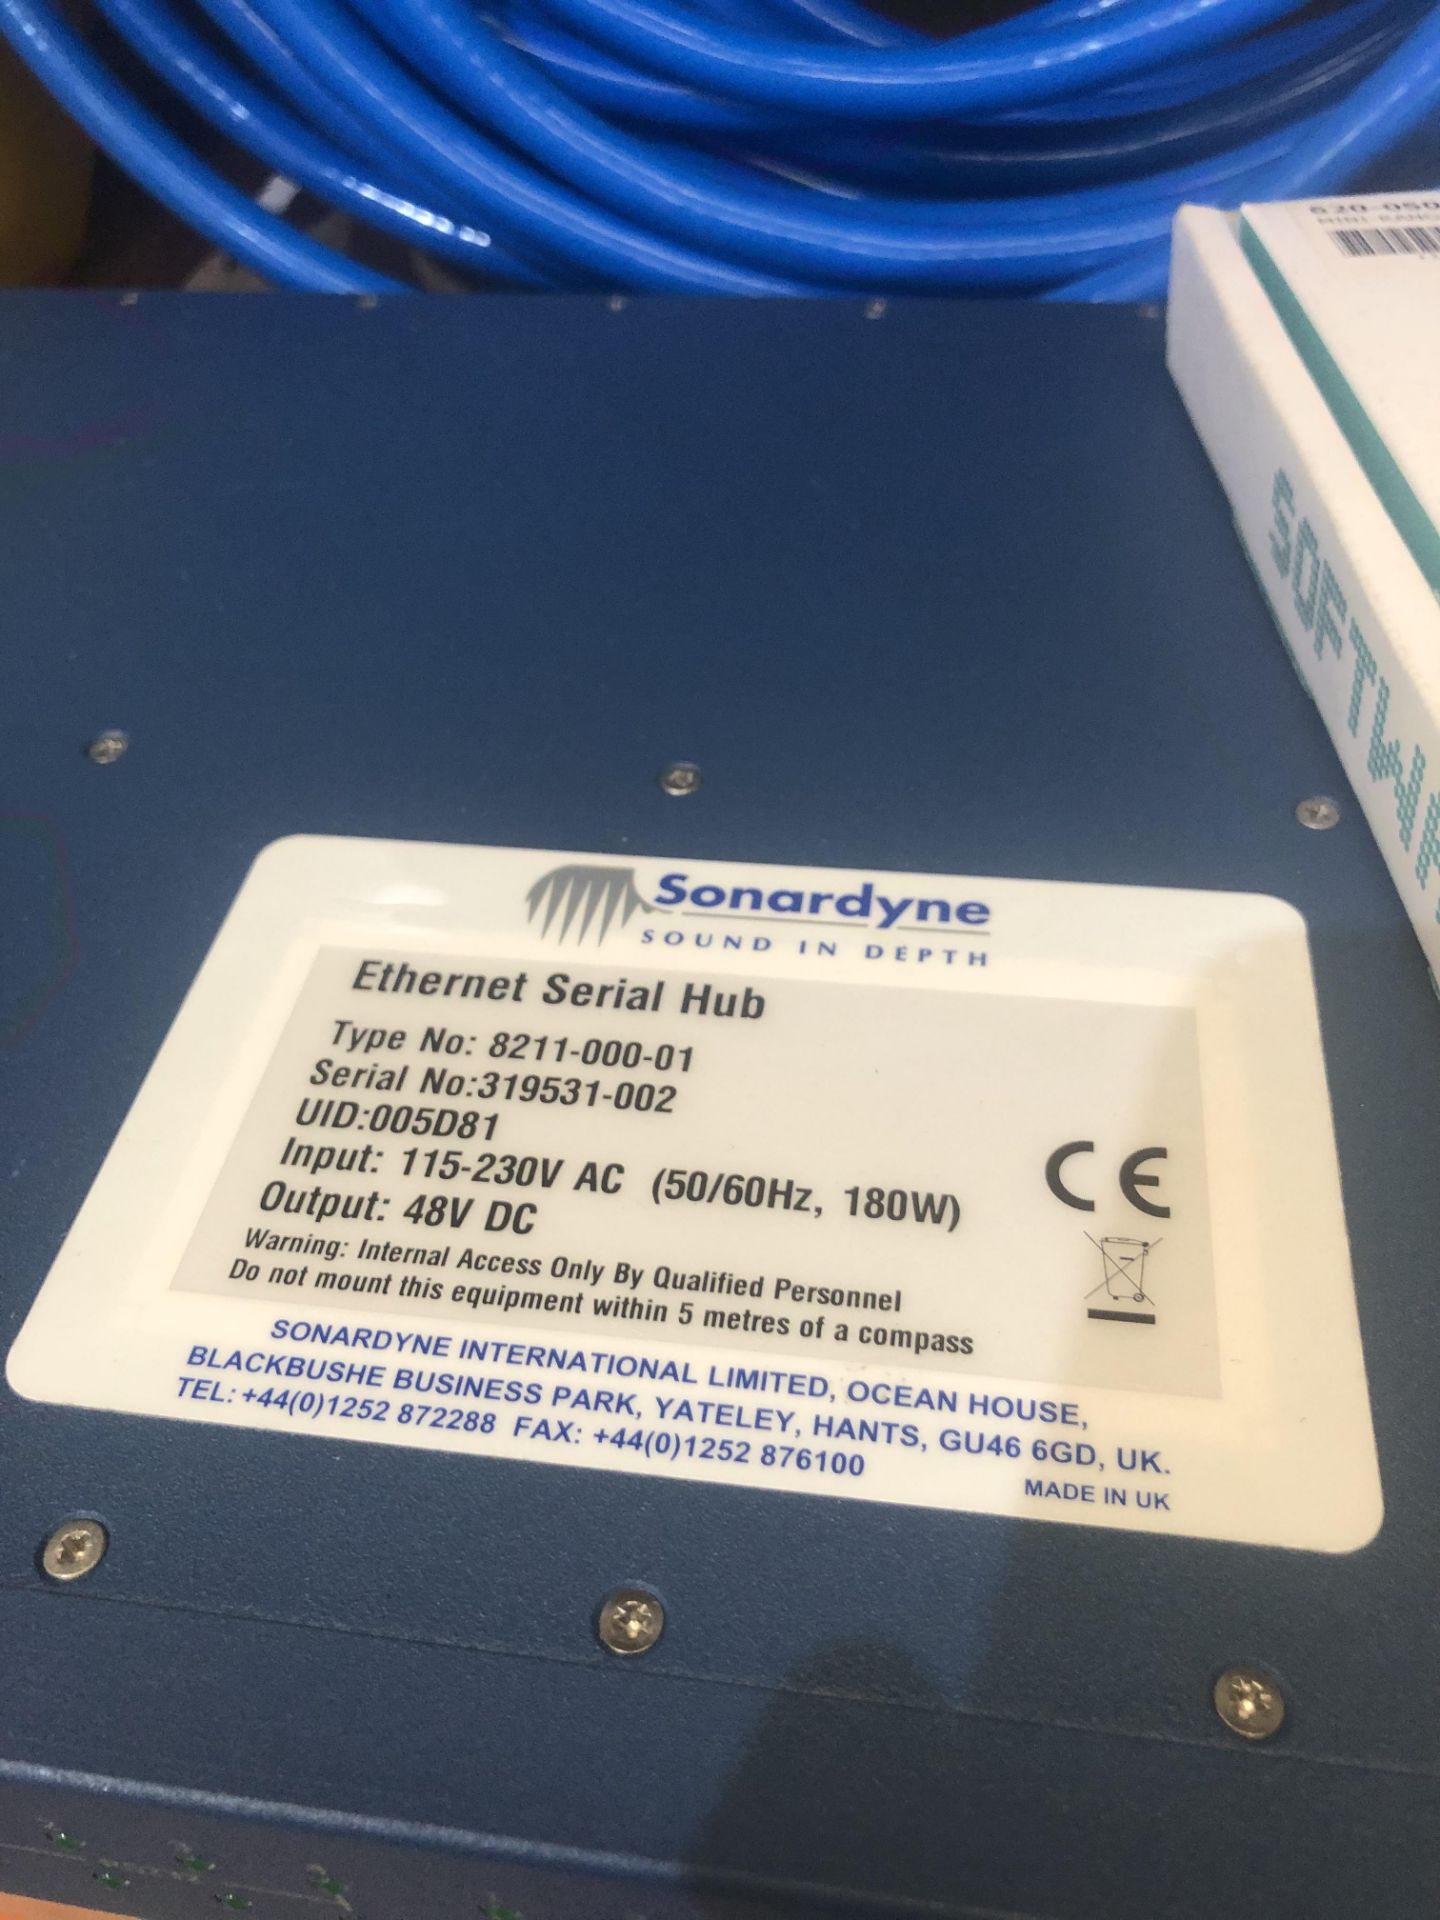 Sonardyne, Mini Ranker 2 USBL system with: Sondardyne, Type HPT3000/8212-000-01 transceiver, - Image 2 of 2